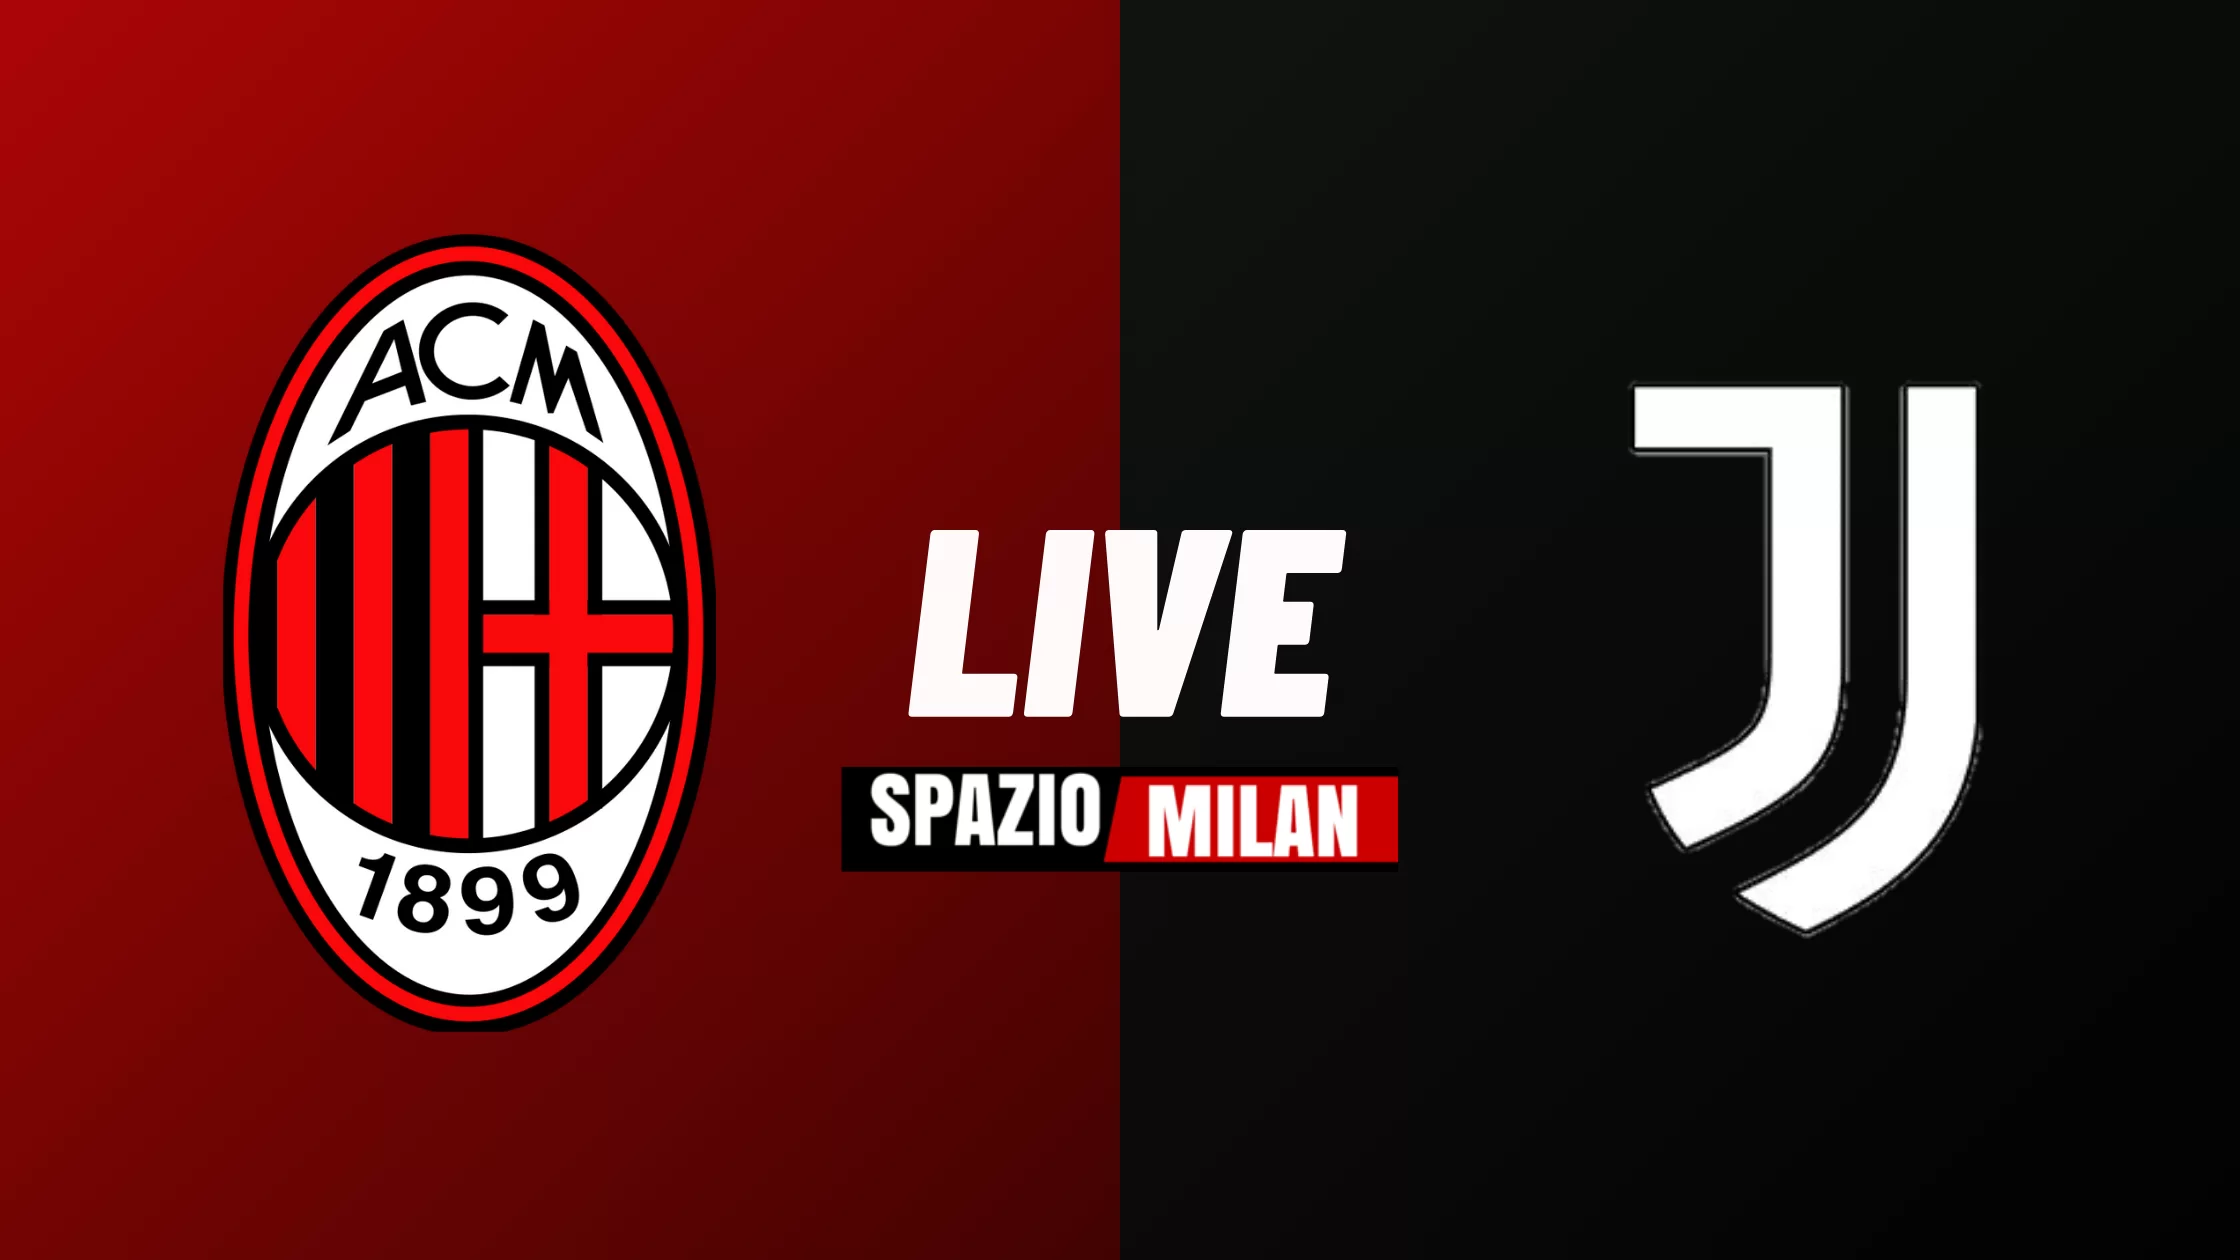 SM RELIVE – Milan-Juventus (2-4) Il Milan cala il poker alla capolista